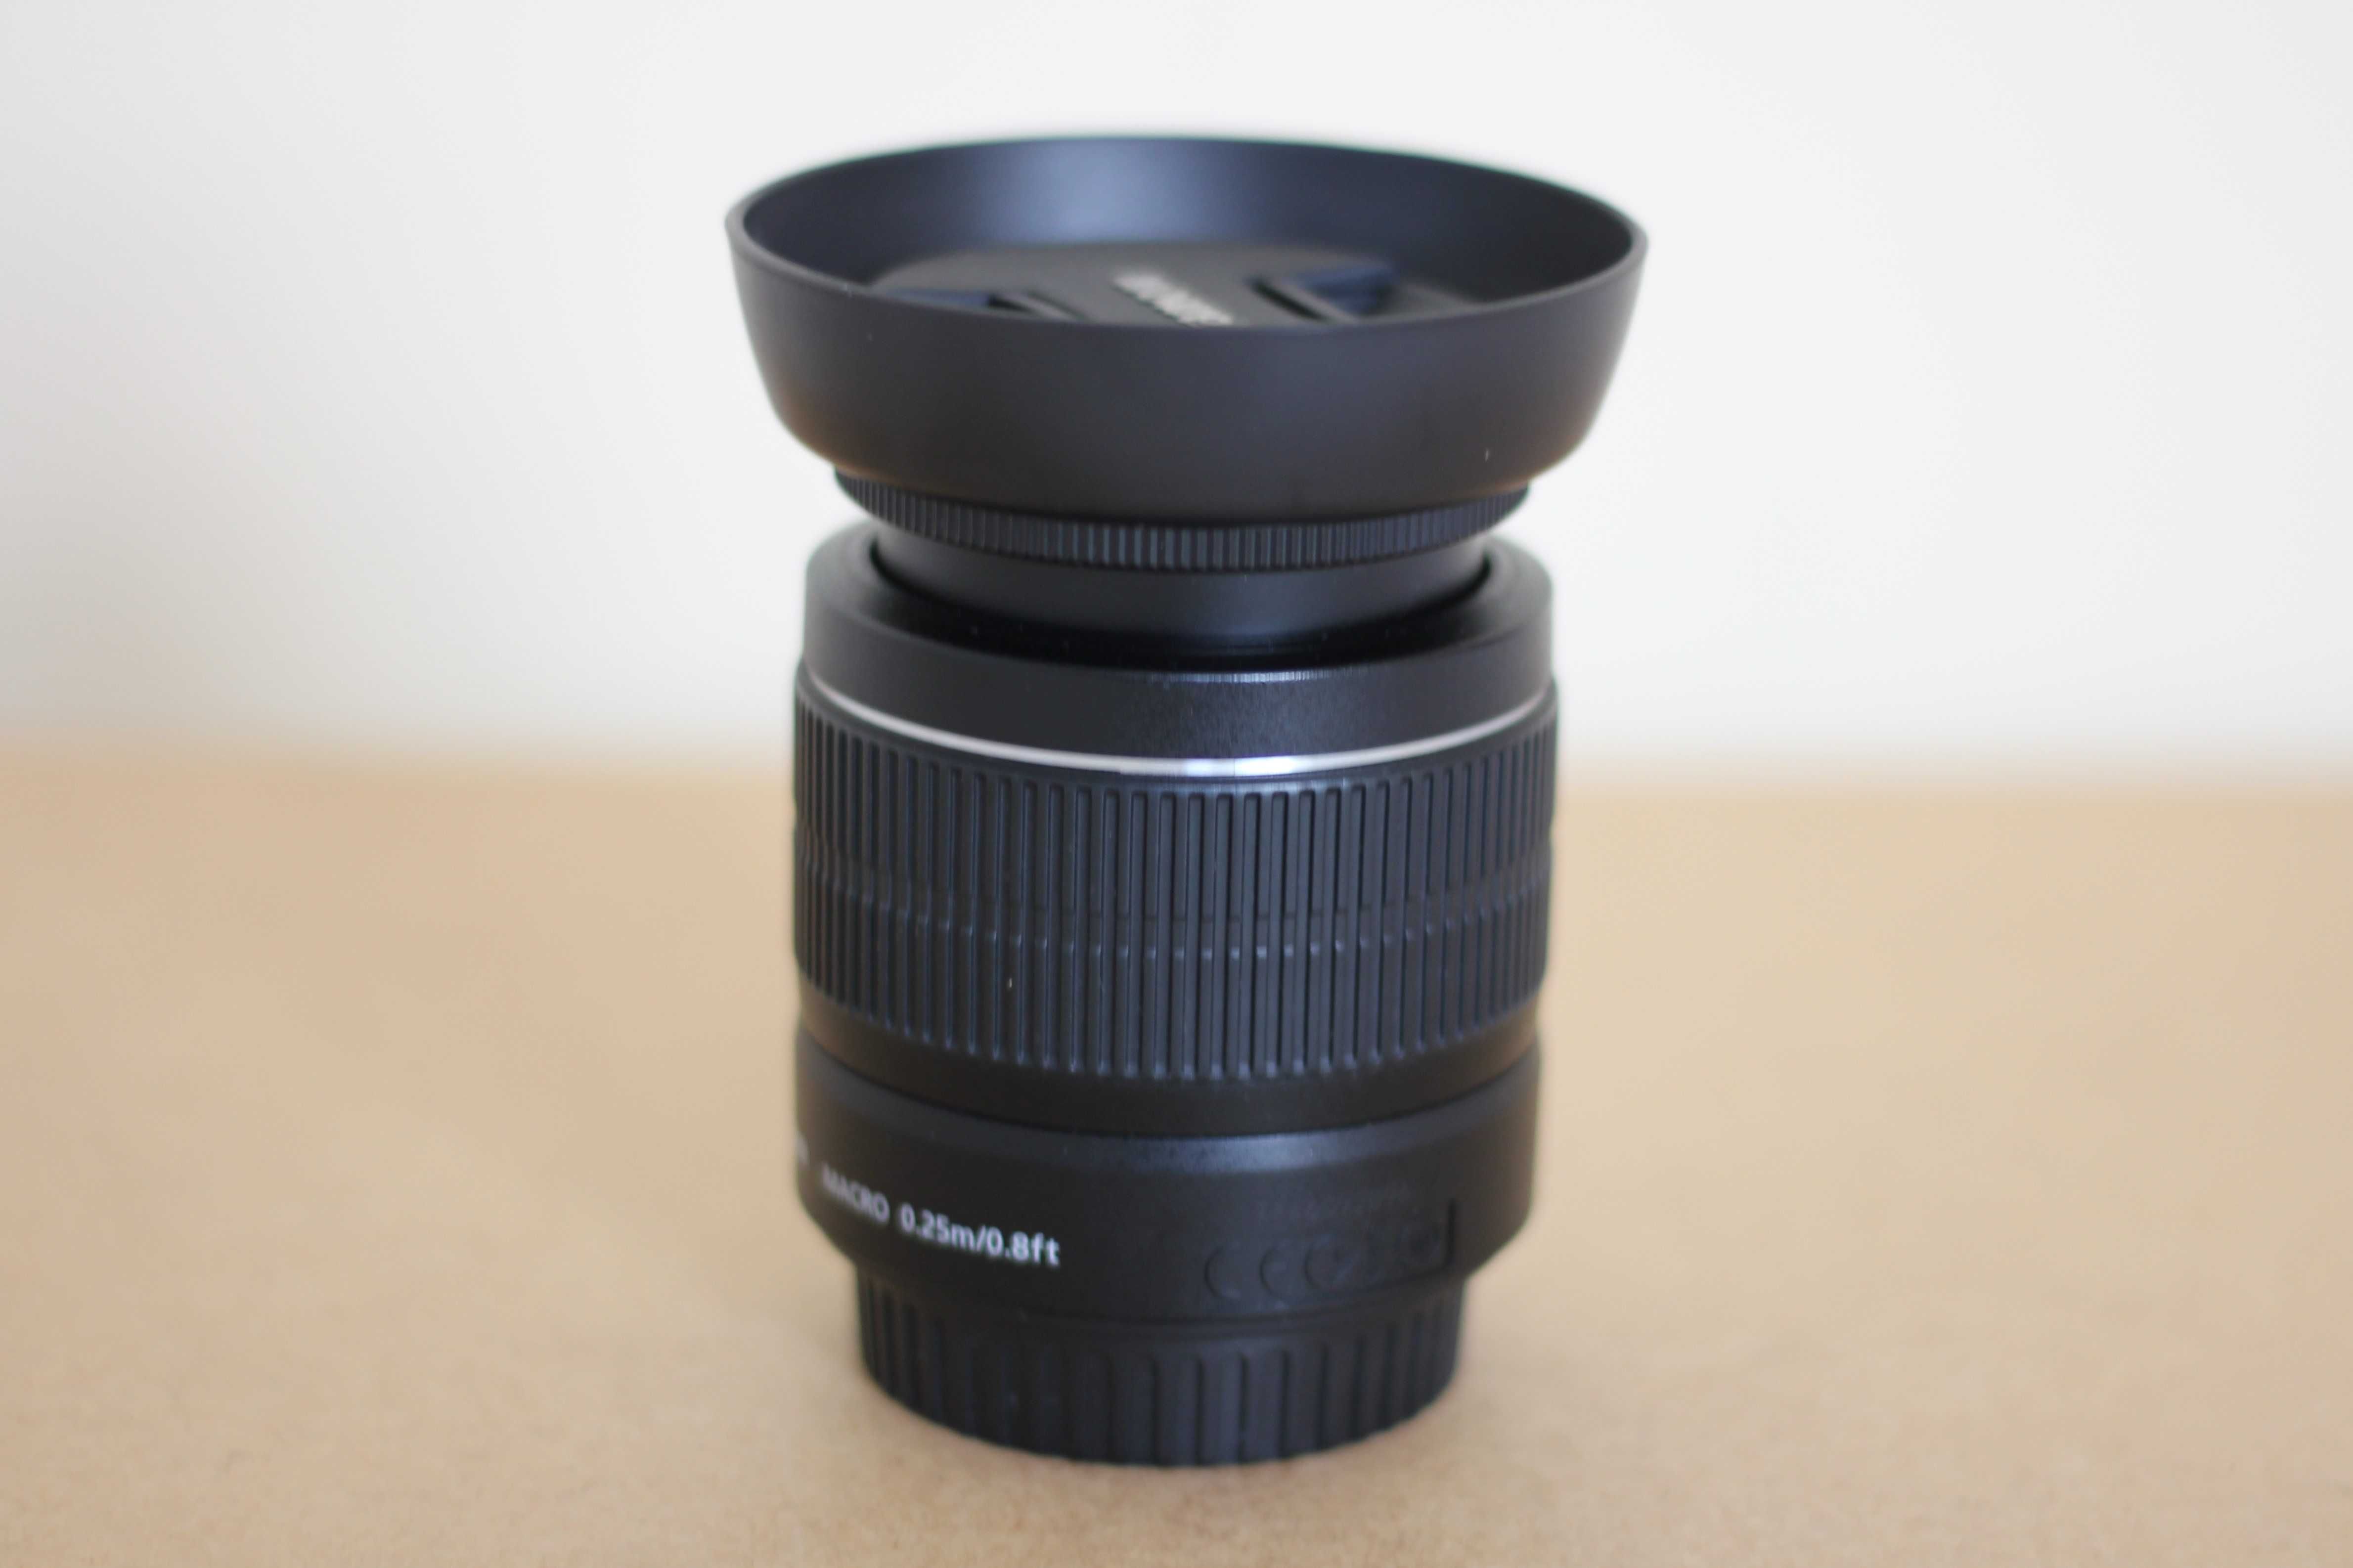 Objetiva CANON  EFS 18-55 mm  lente Canon EF-S 18-55mm f/3.5-5.6 IS II